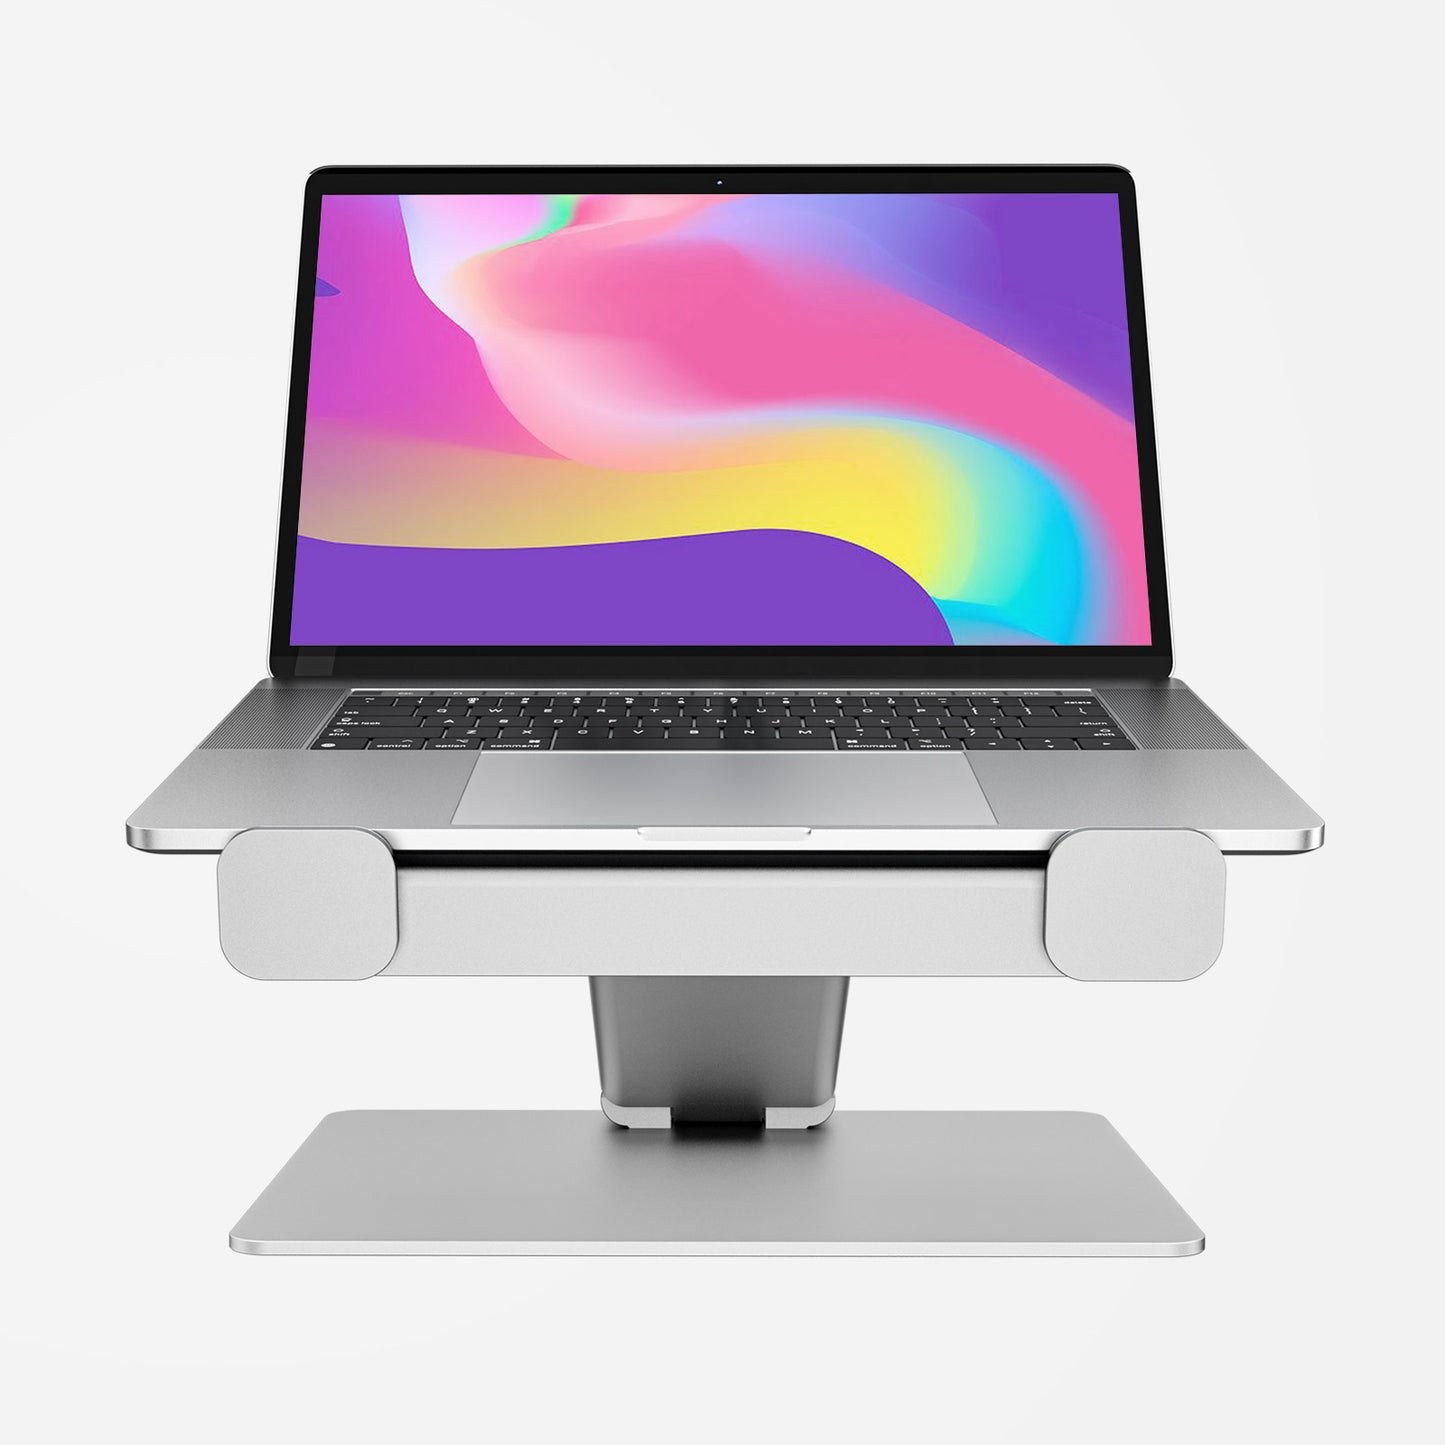 【Laptop Stand】PCスタンド 折りたたみ式 パソコン PC ラップトップ ノートパソコン スタンド MacBook / MacBook Air アルミ合金 安定 角度調整 D0045